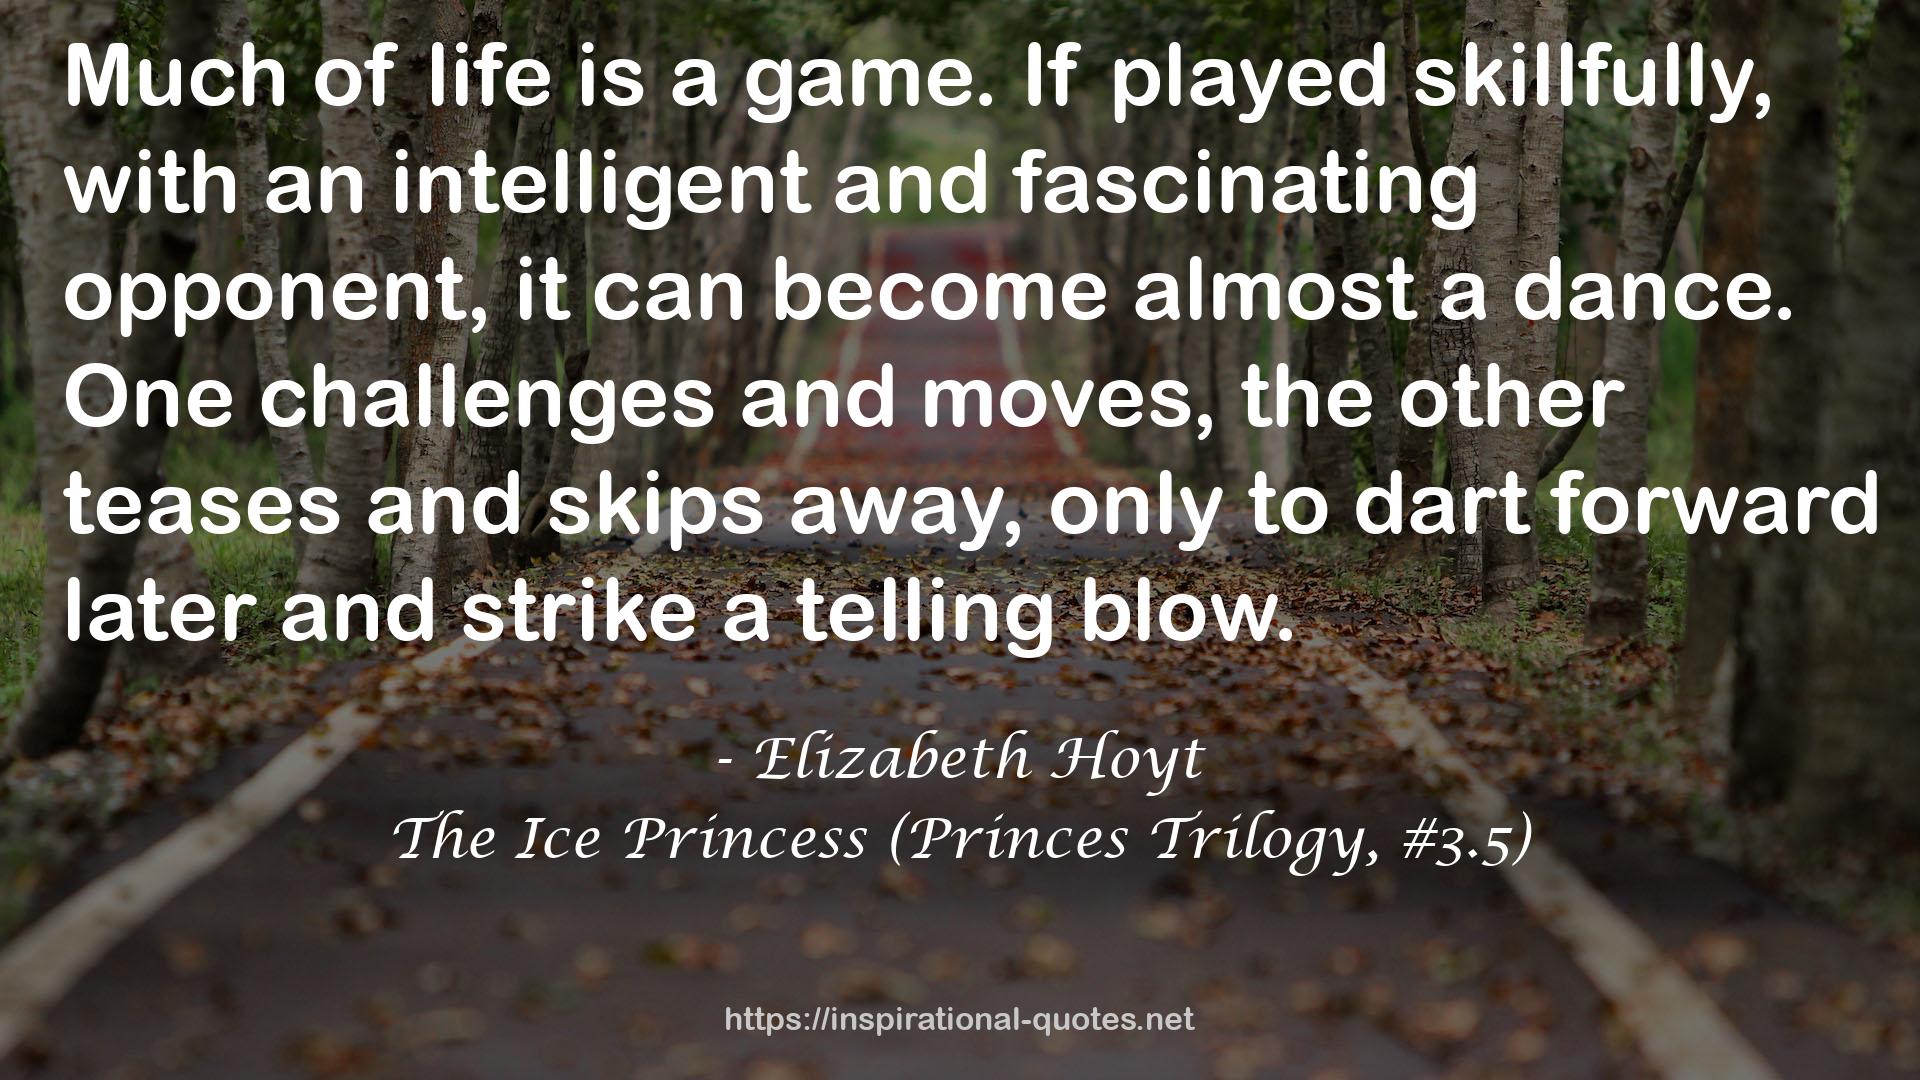 The Ice Princess (Princes Trilogy, #3.5) QUOTES